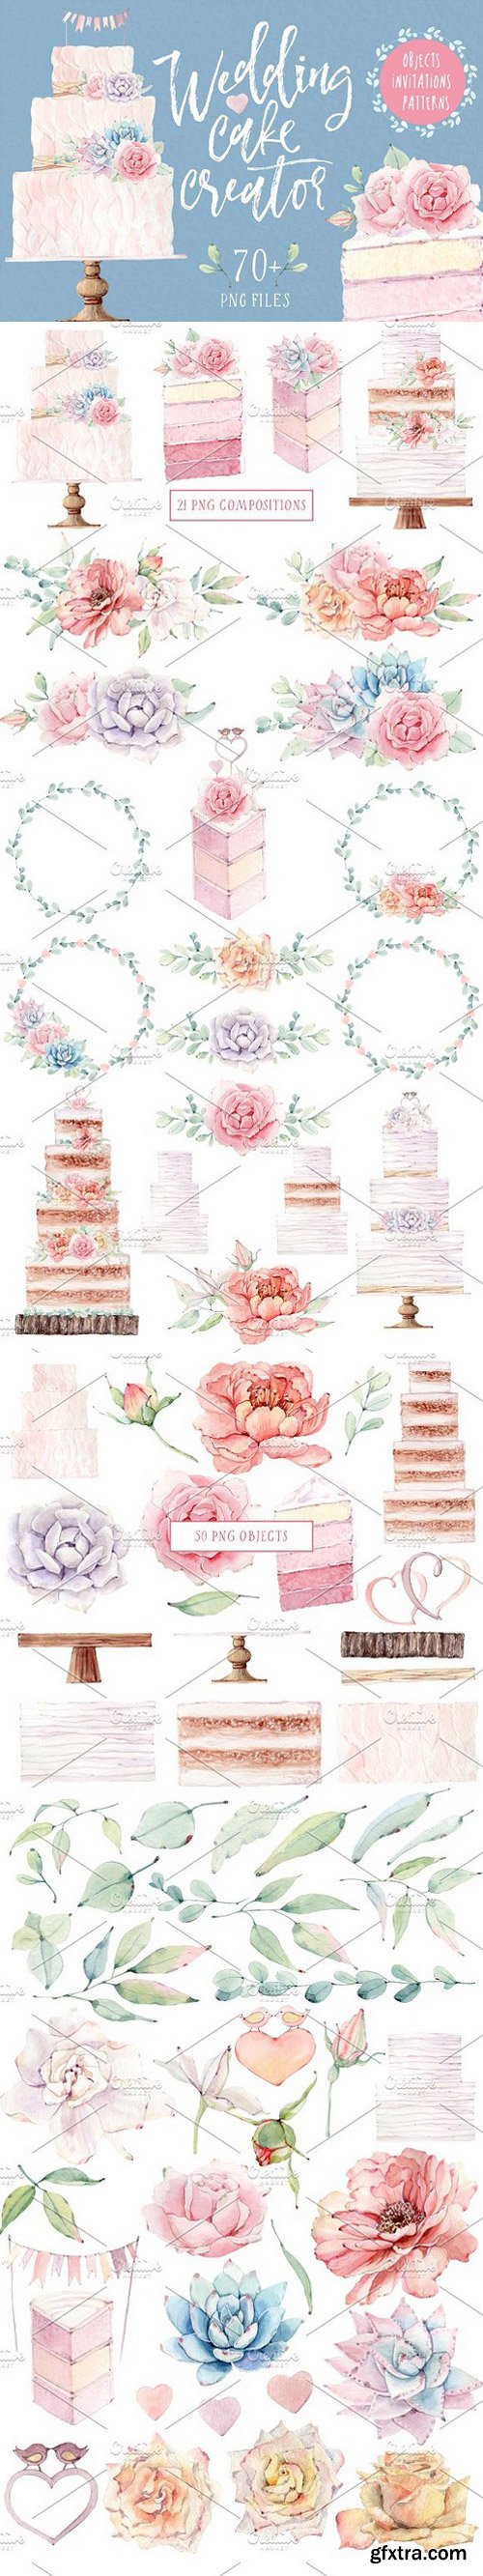 CM - WEDDING CAKE CREATOR watercolor set 1490261